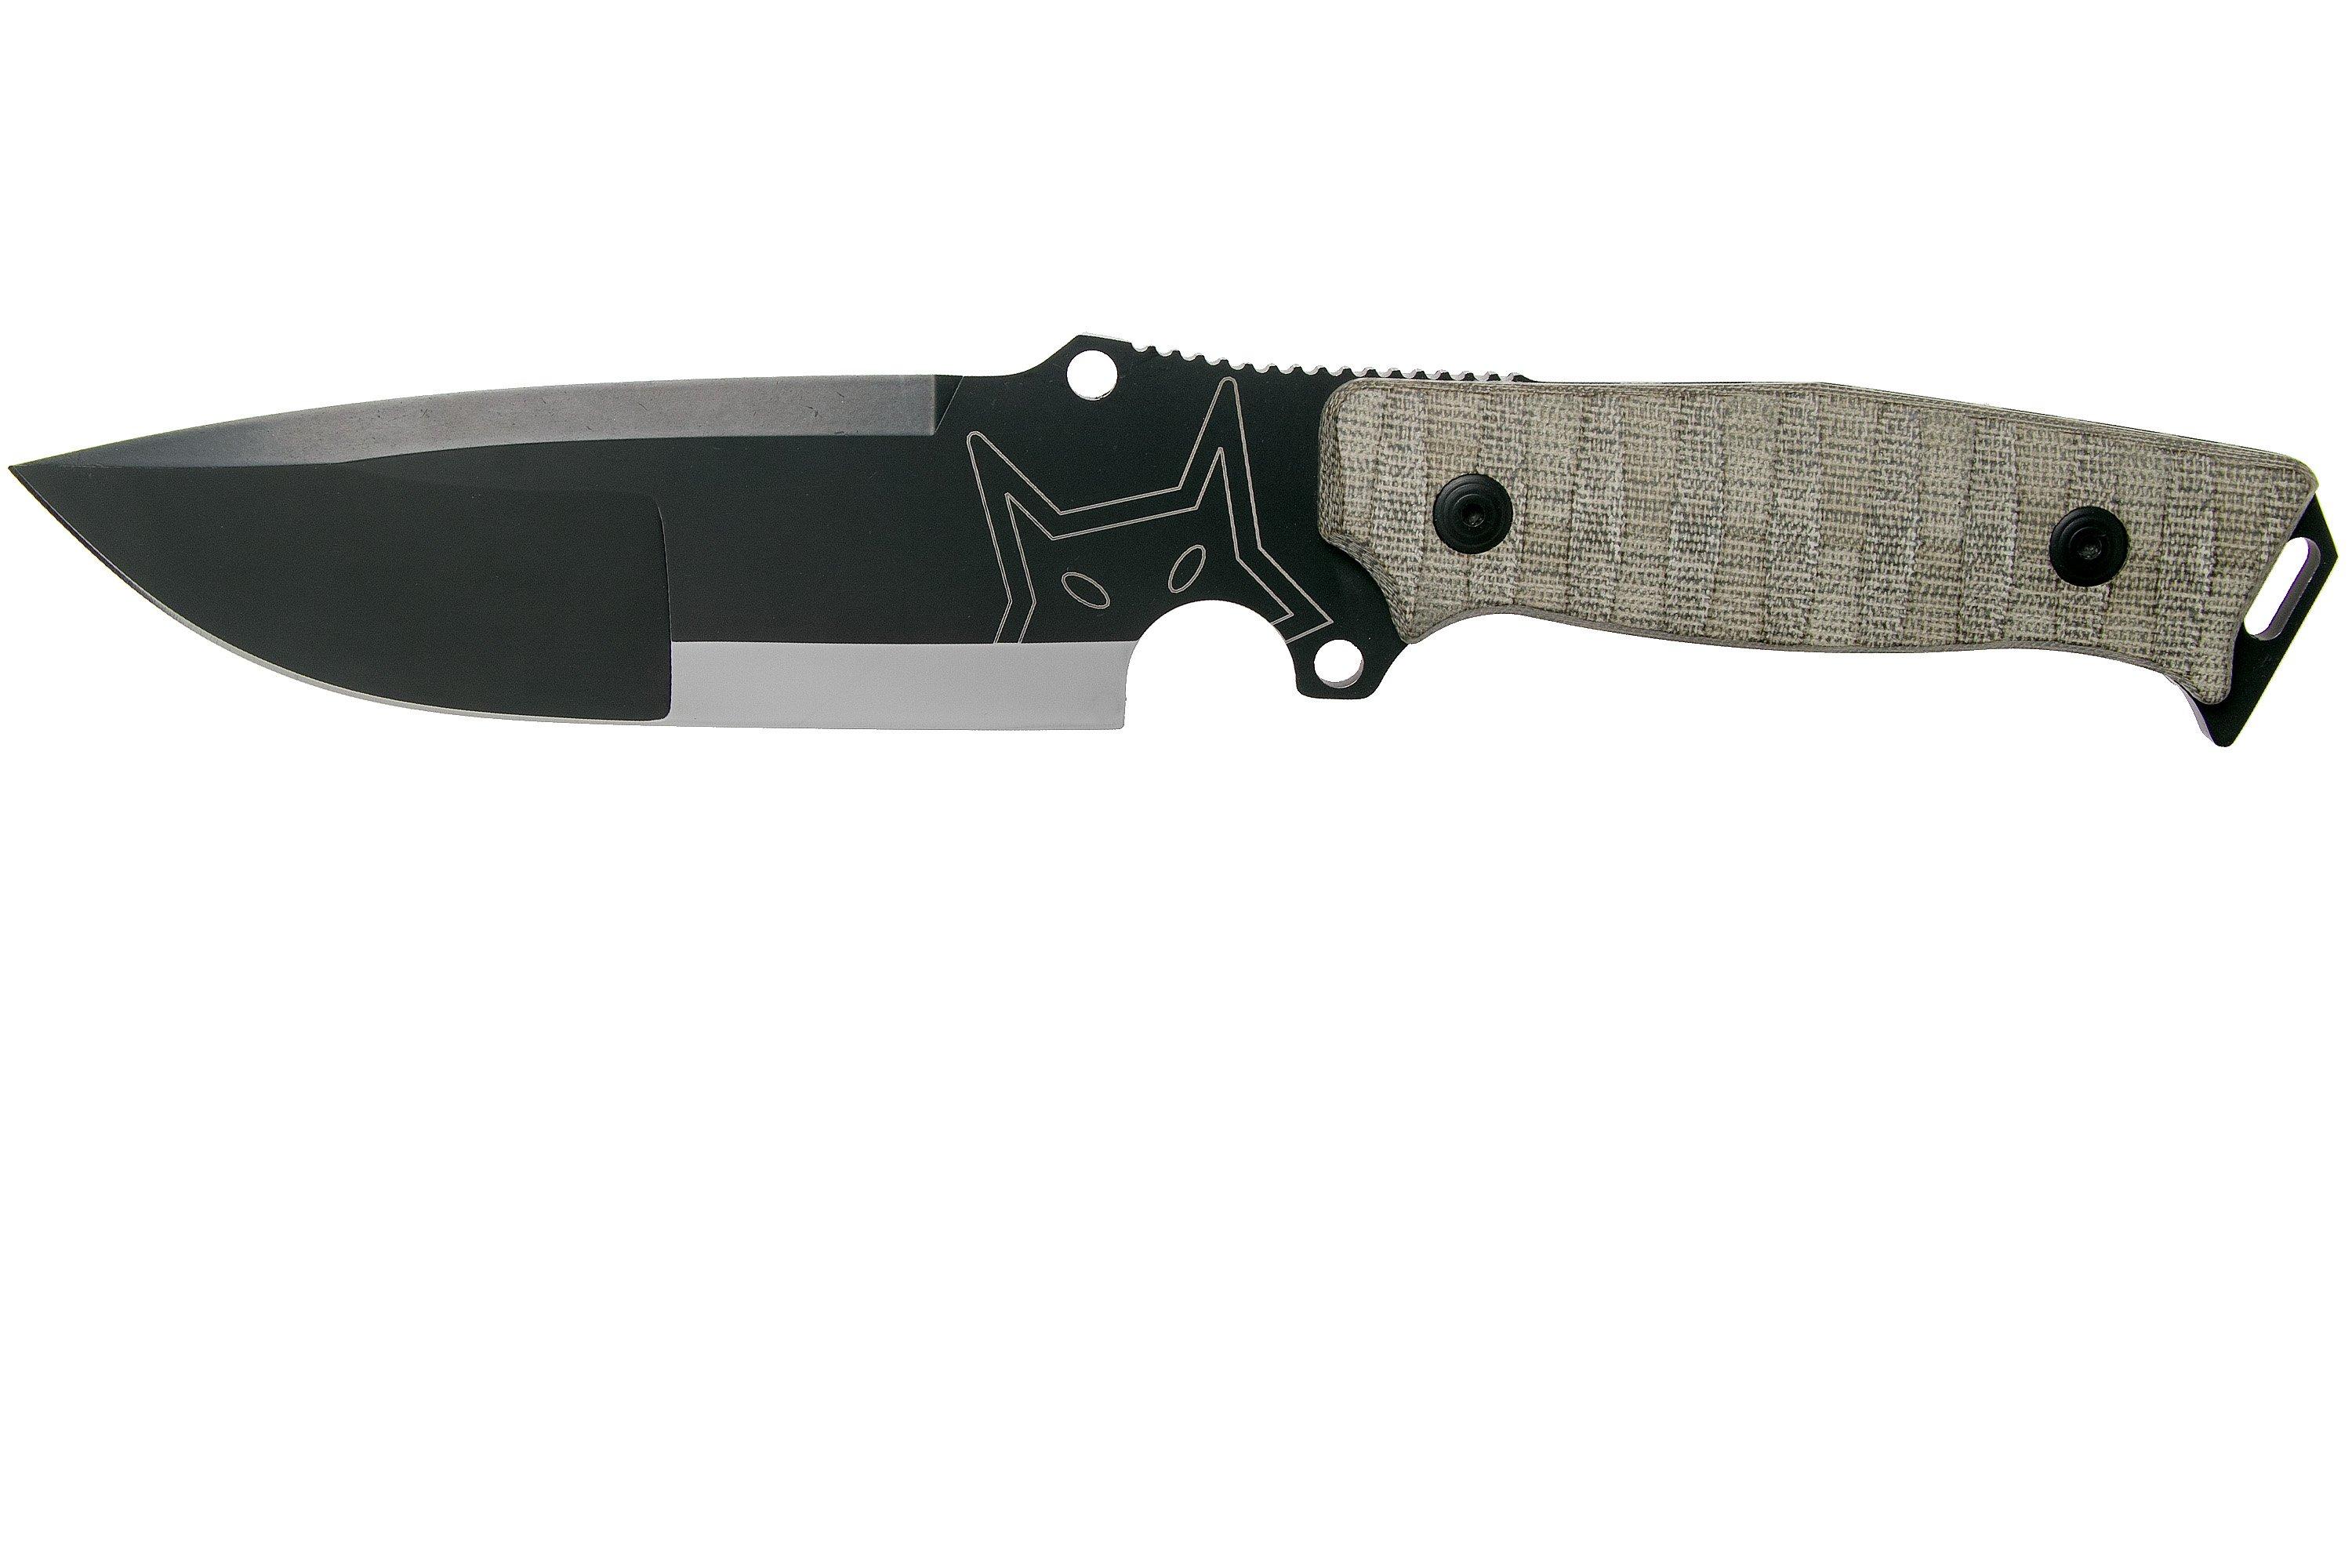 Fox Sherpa Bushman FX-610 outdoor knife  Advantageously shopping at